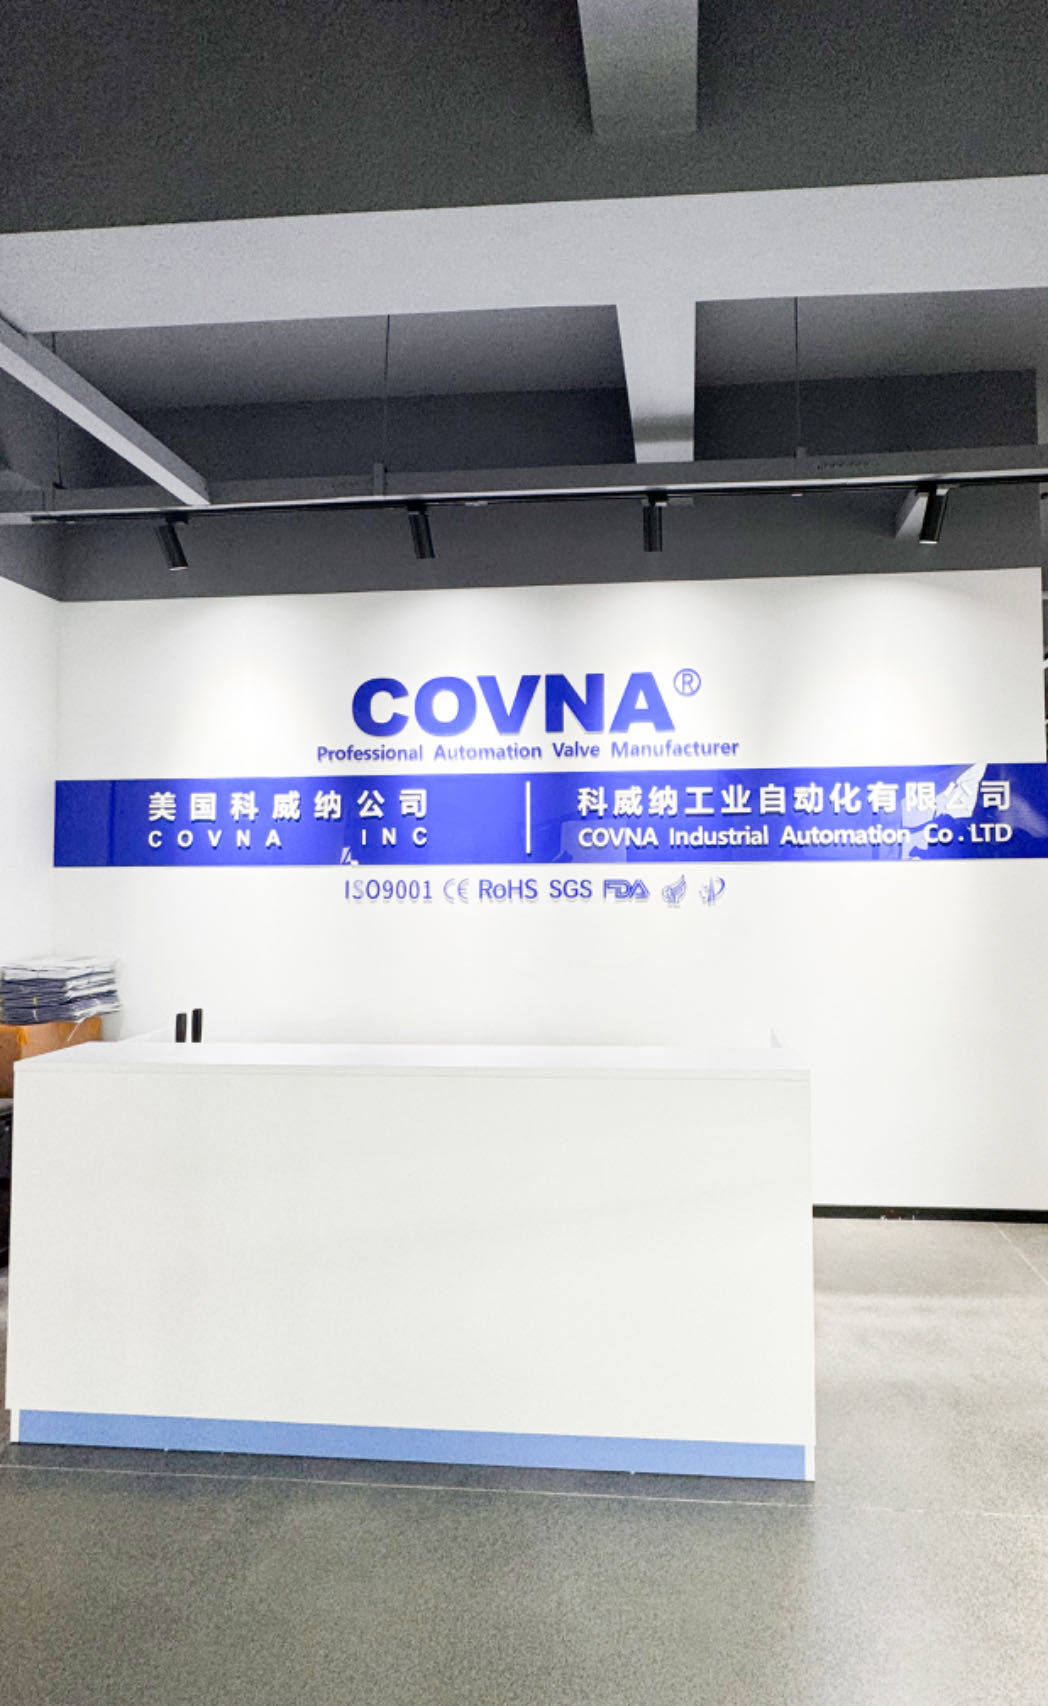 COVNA科威纳：独立研发技术中心，是自动化解决方案的创新动力源与产品质量保证